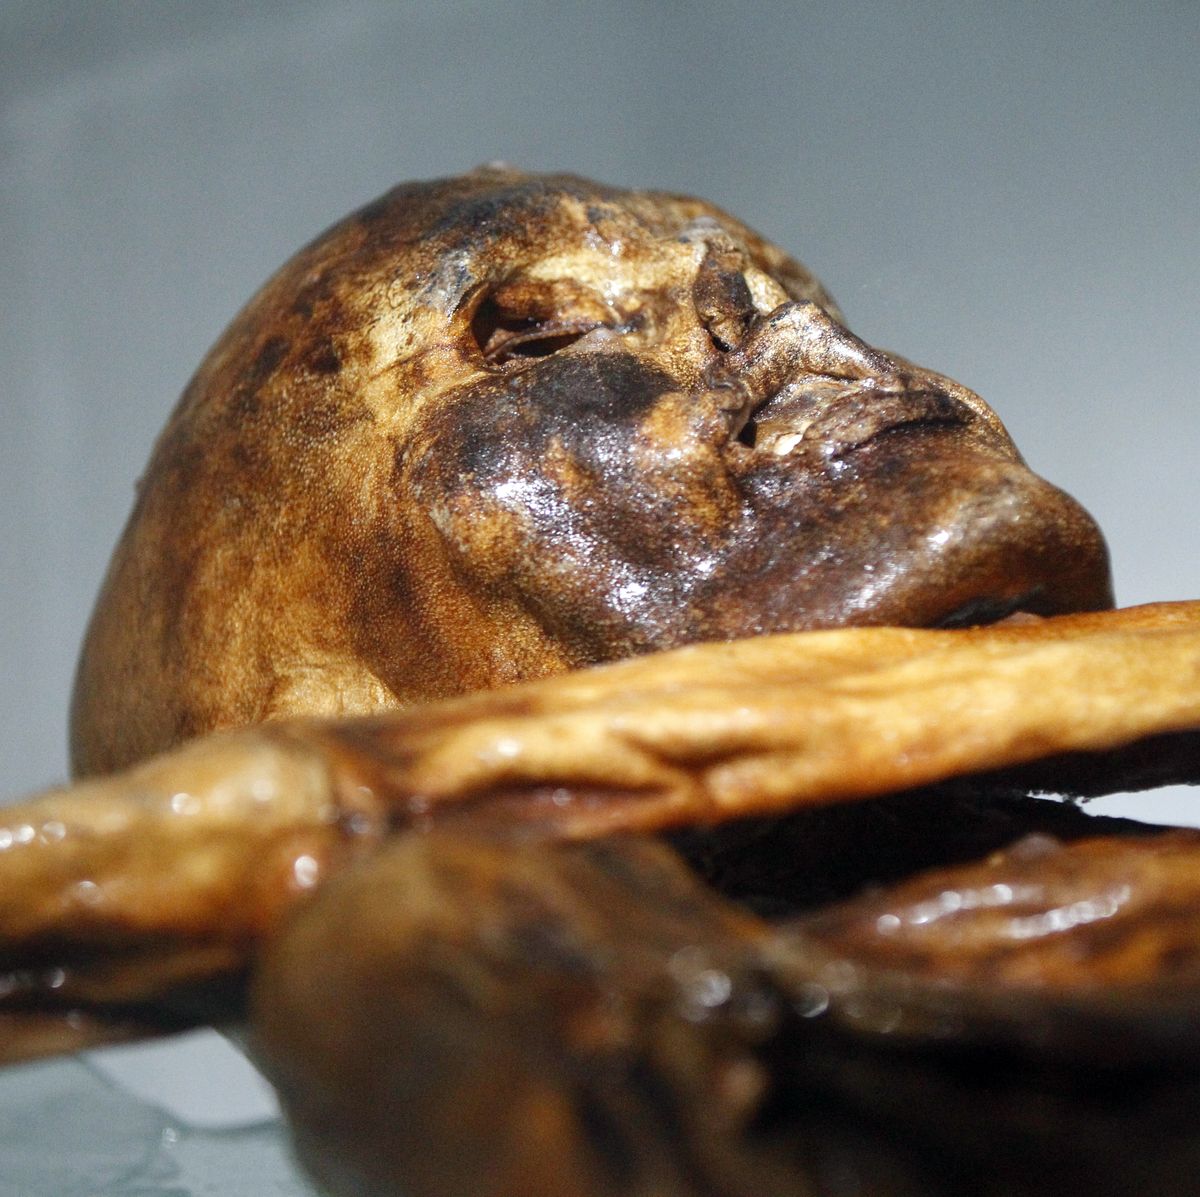 5,000-Year-Old Mummified Iceman Revealed As Balding Farmer